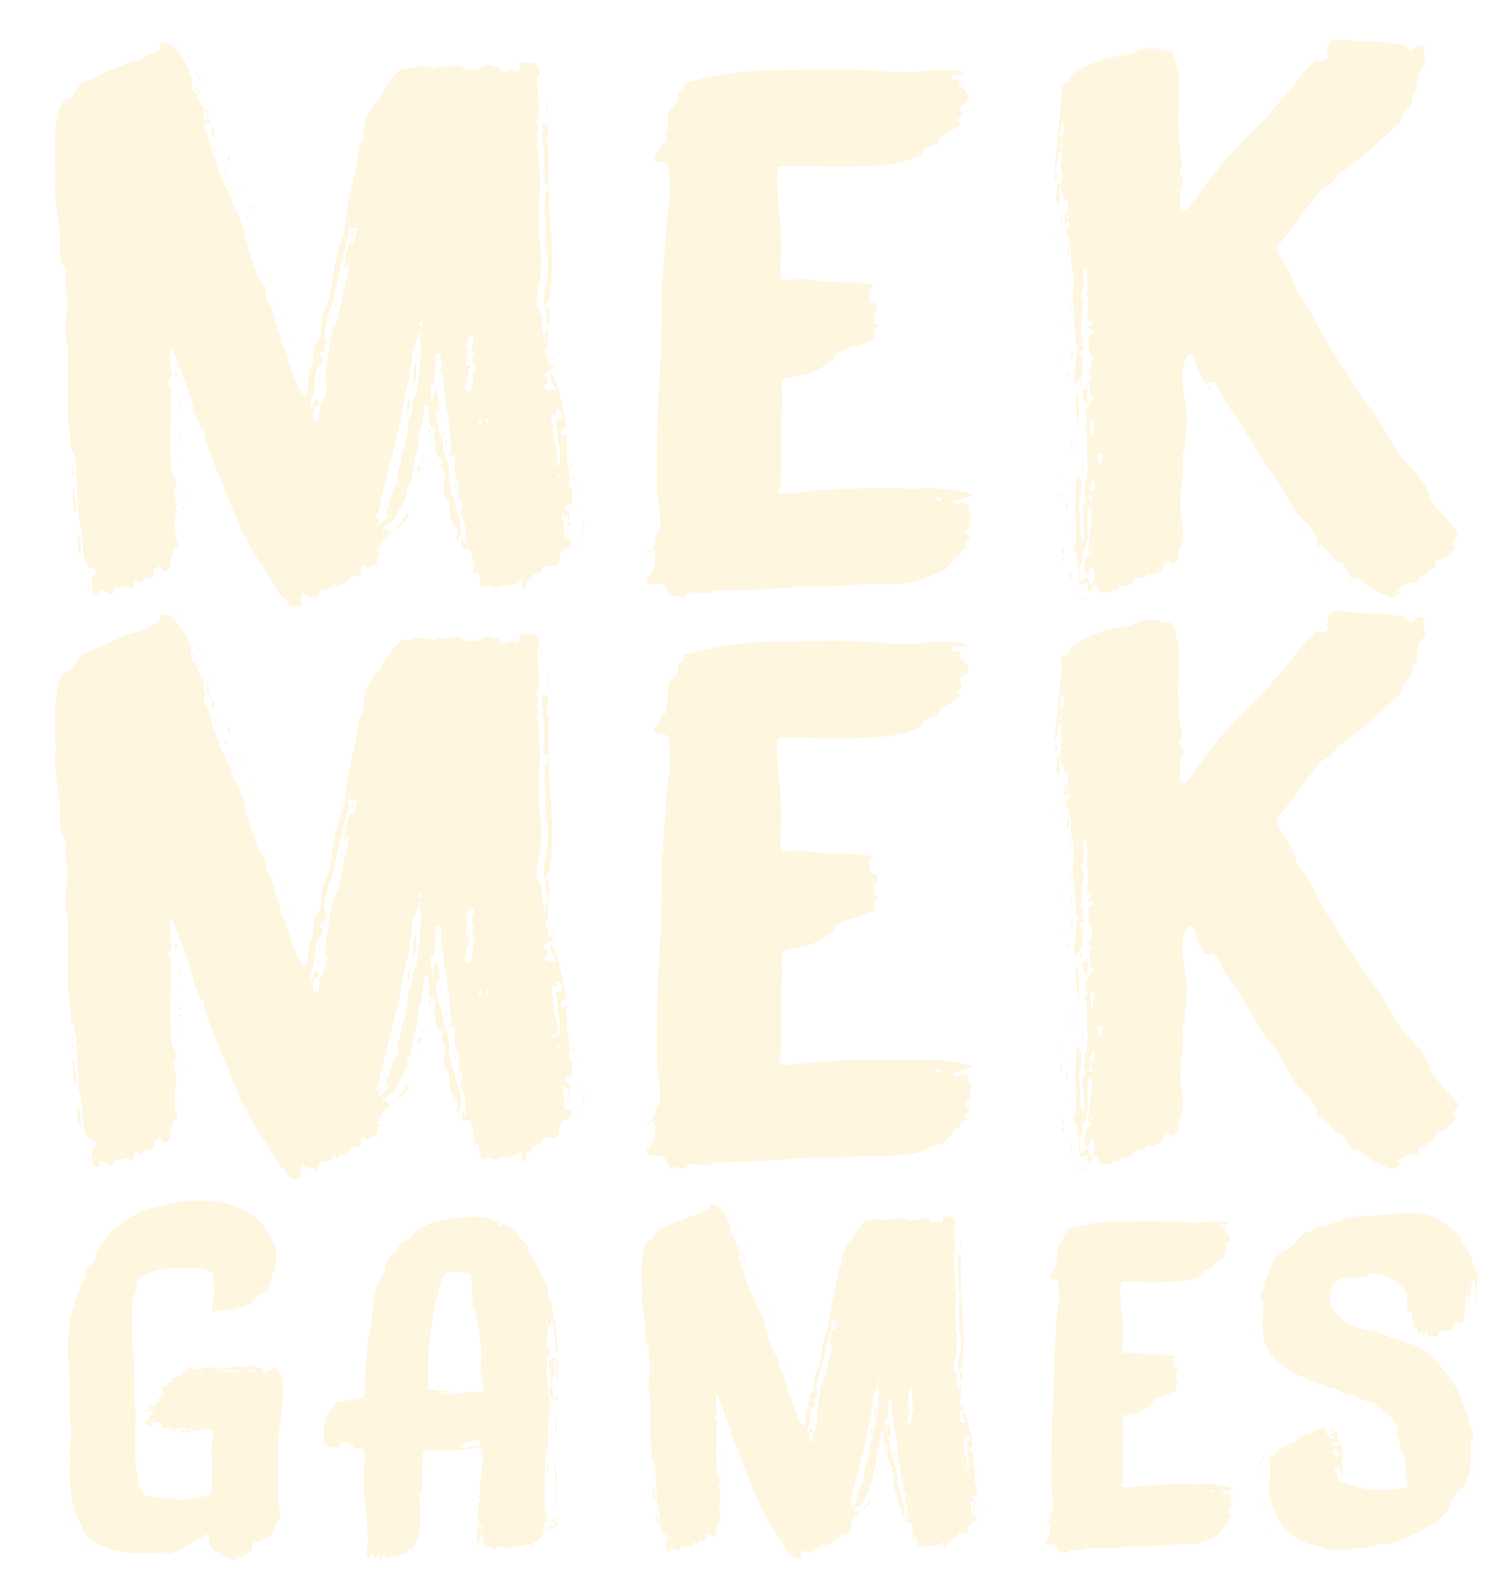 Mek Mek Games